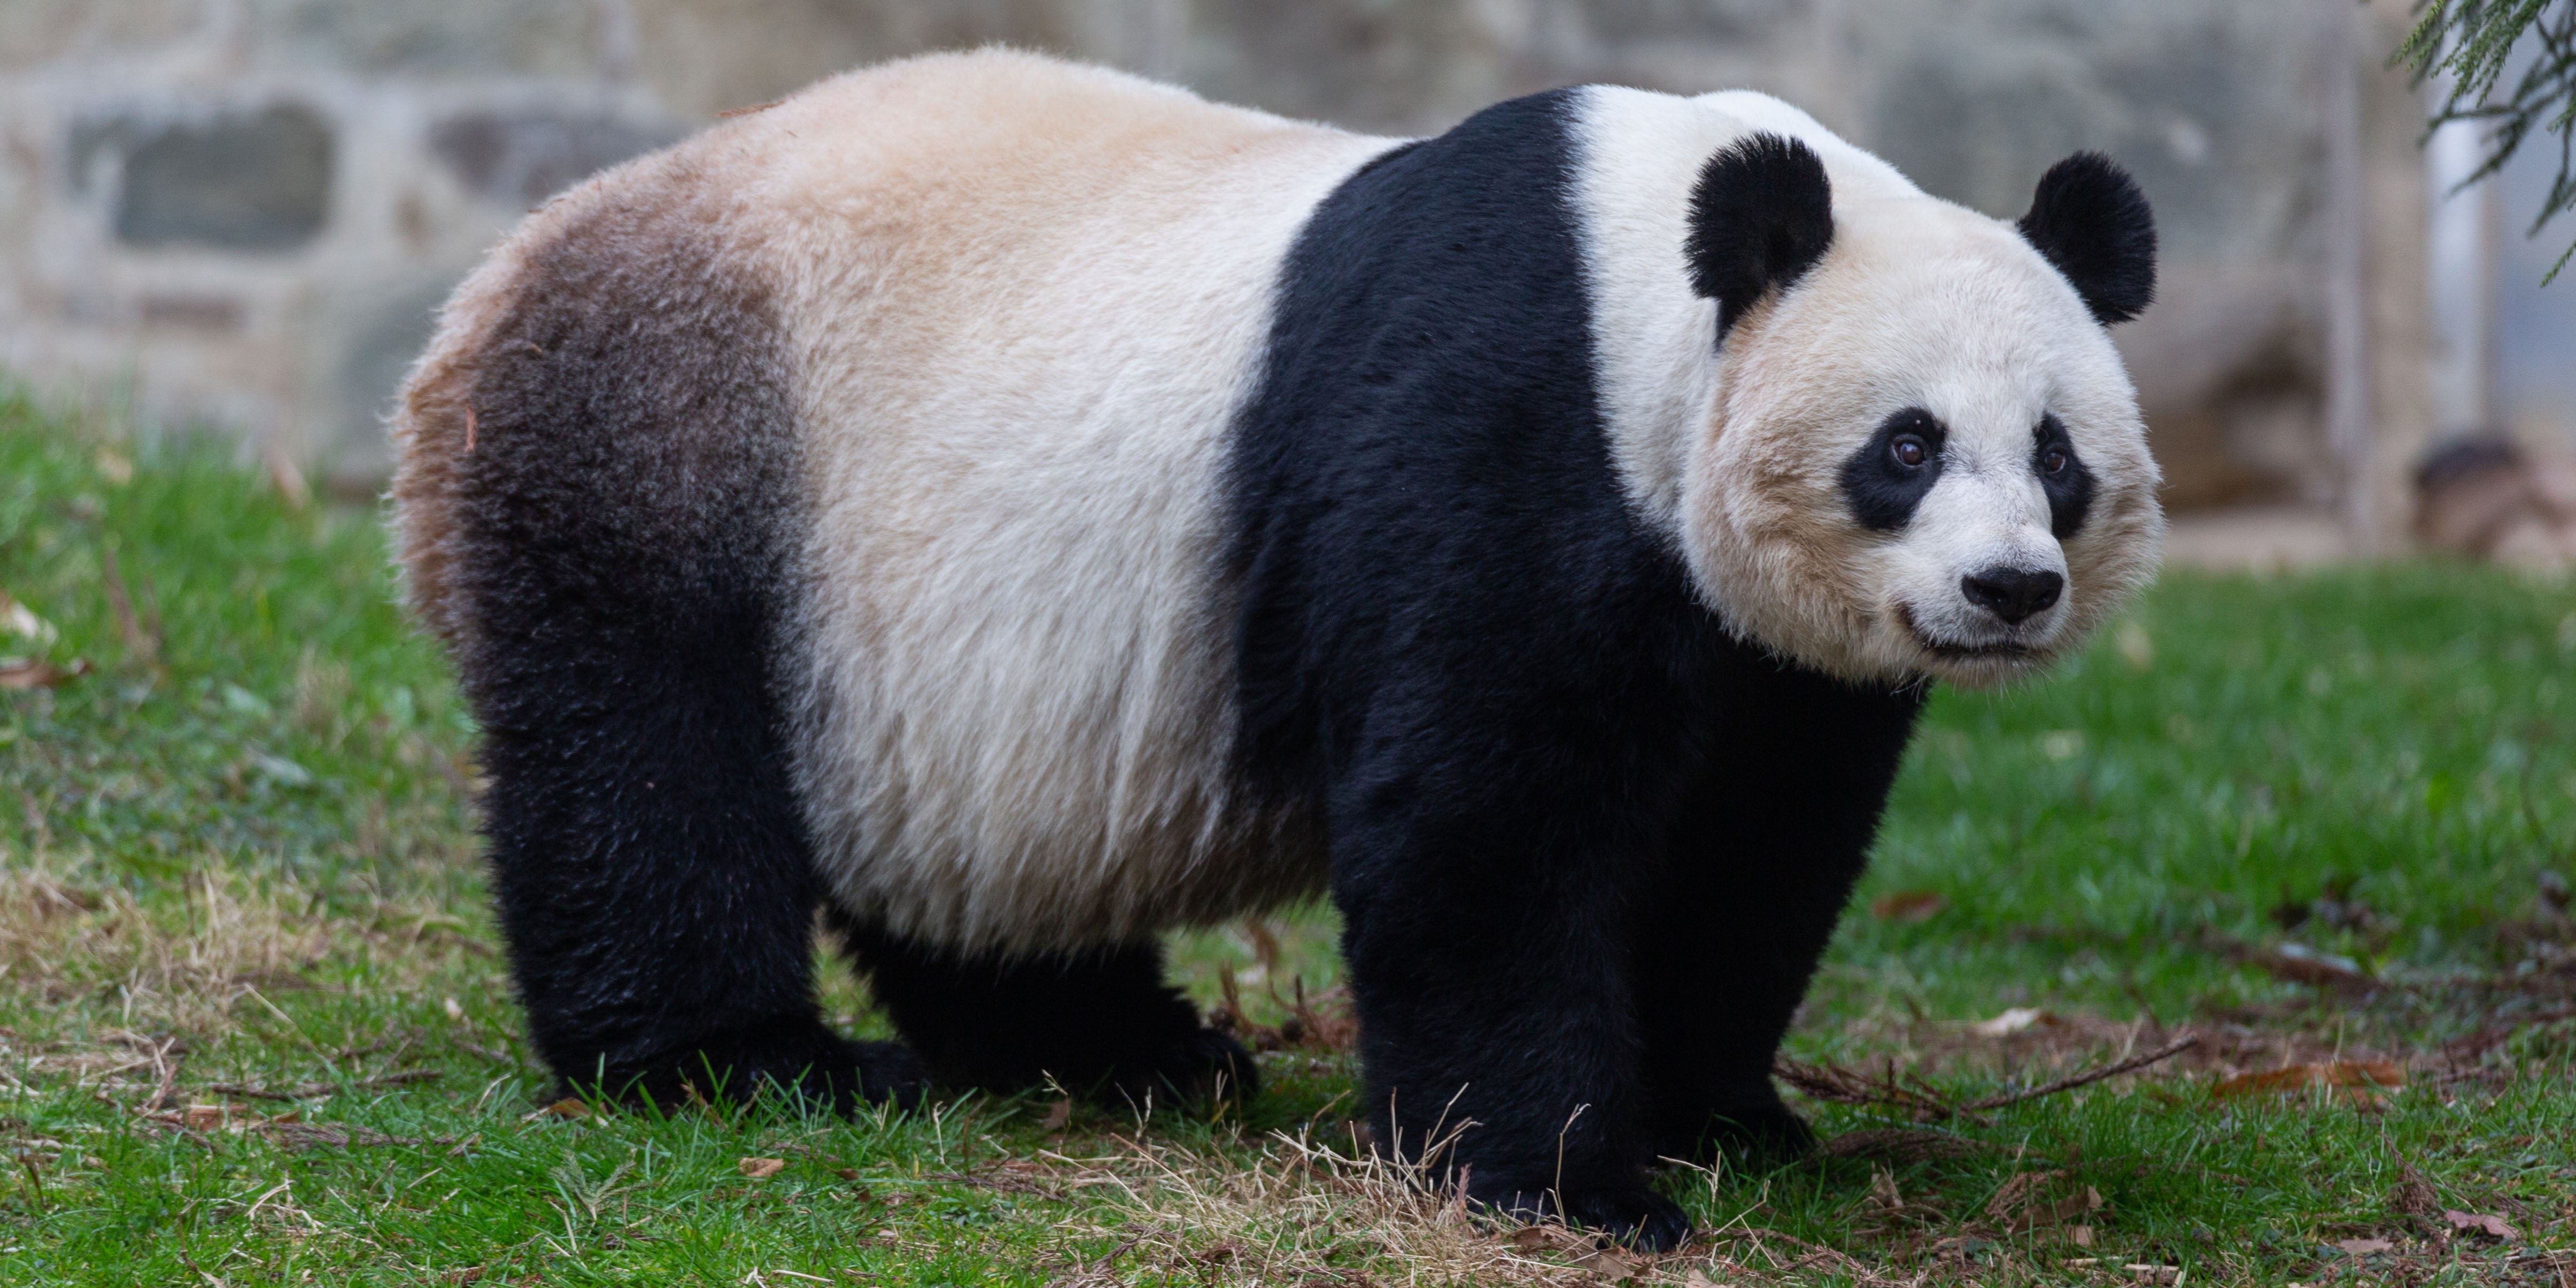 Celebrating National Panda Day | Smithsonian's National Zoo